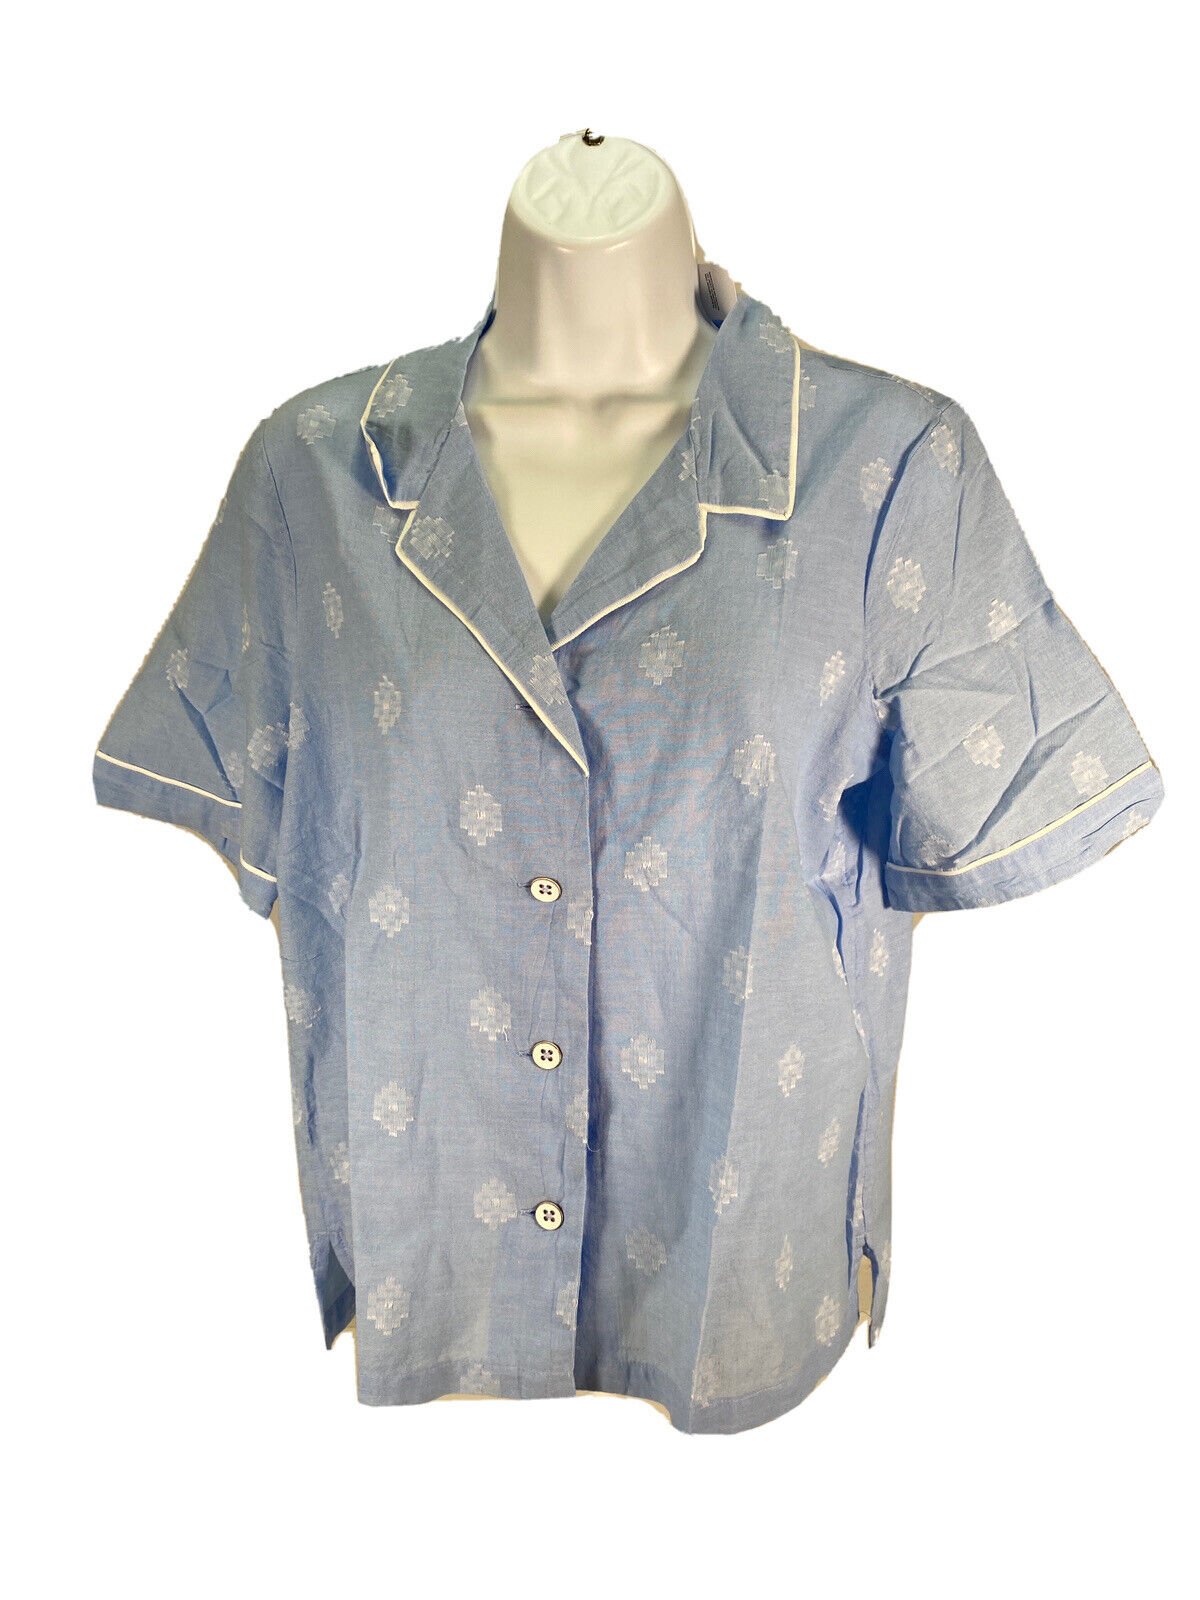 NEW Lou & Grey Women's Blue Short Sleeve Button Up Top Blouse Sz M